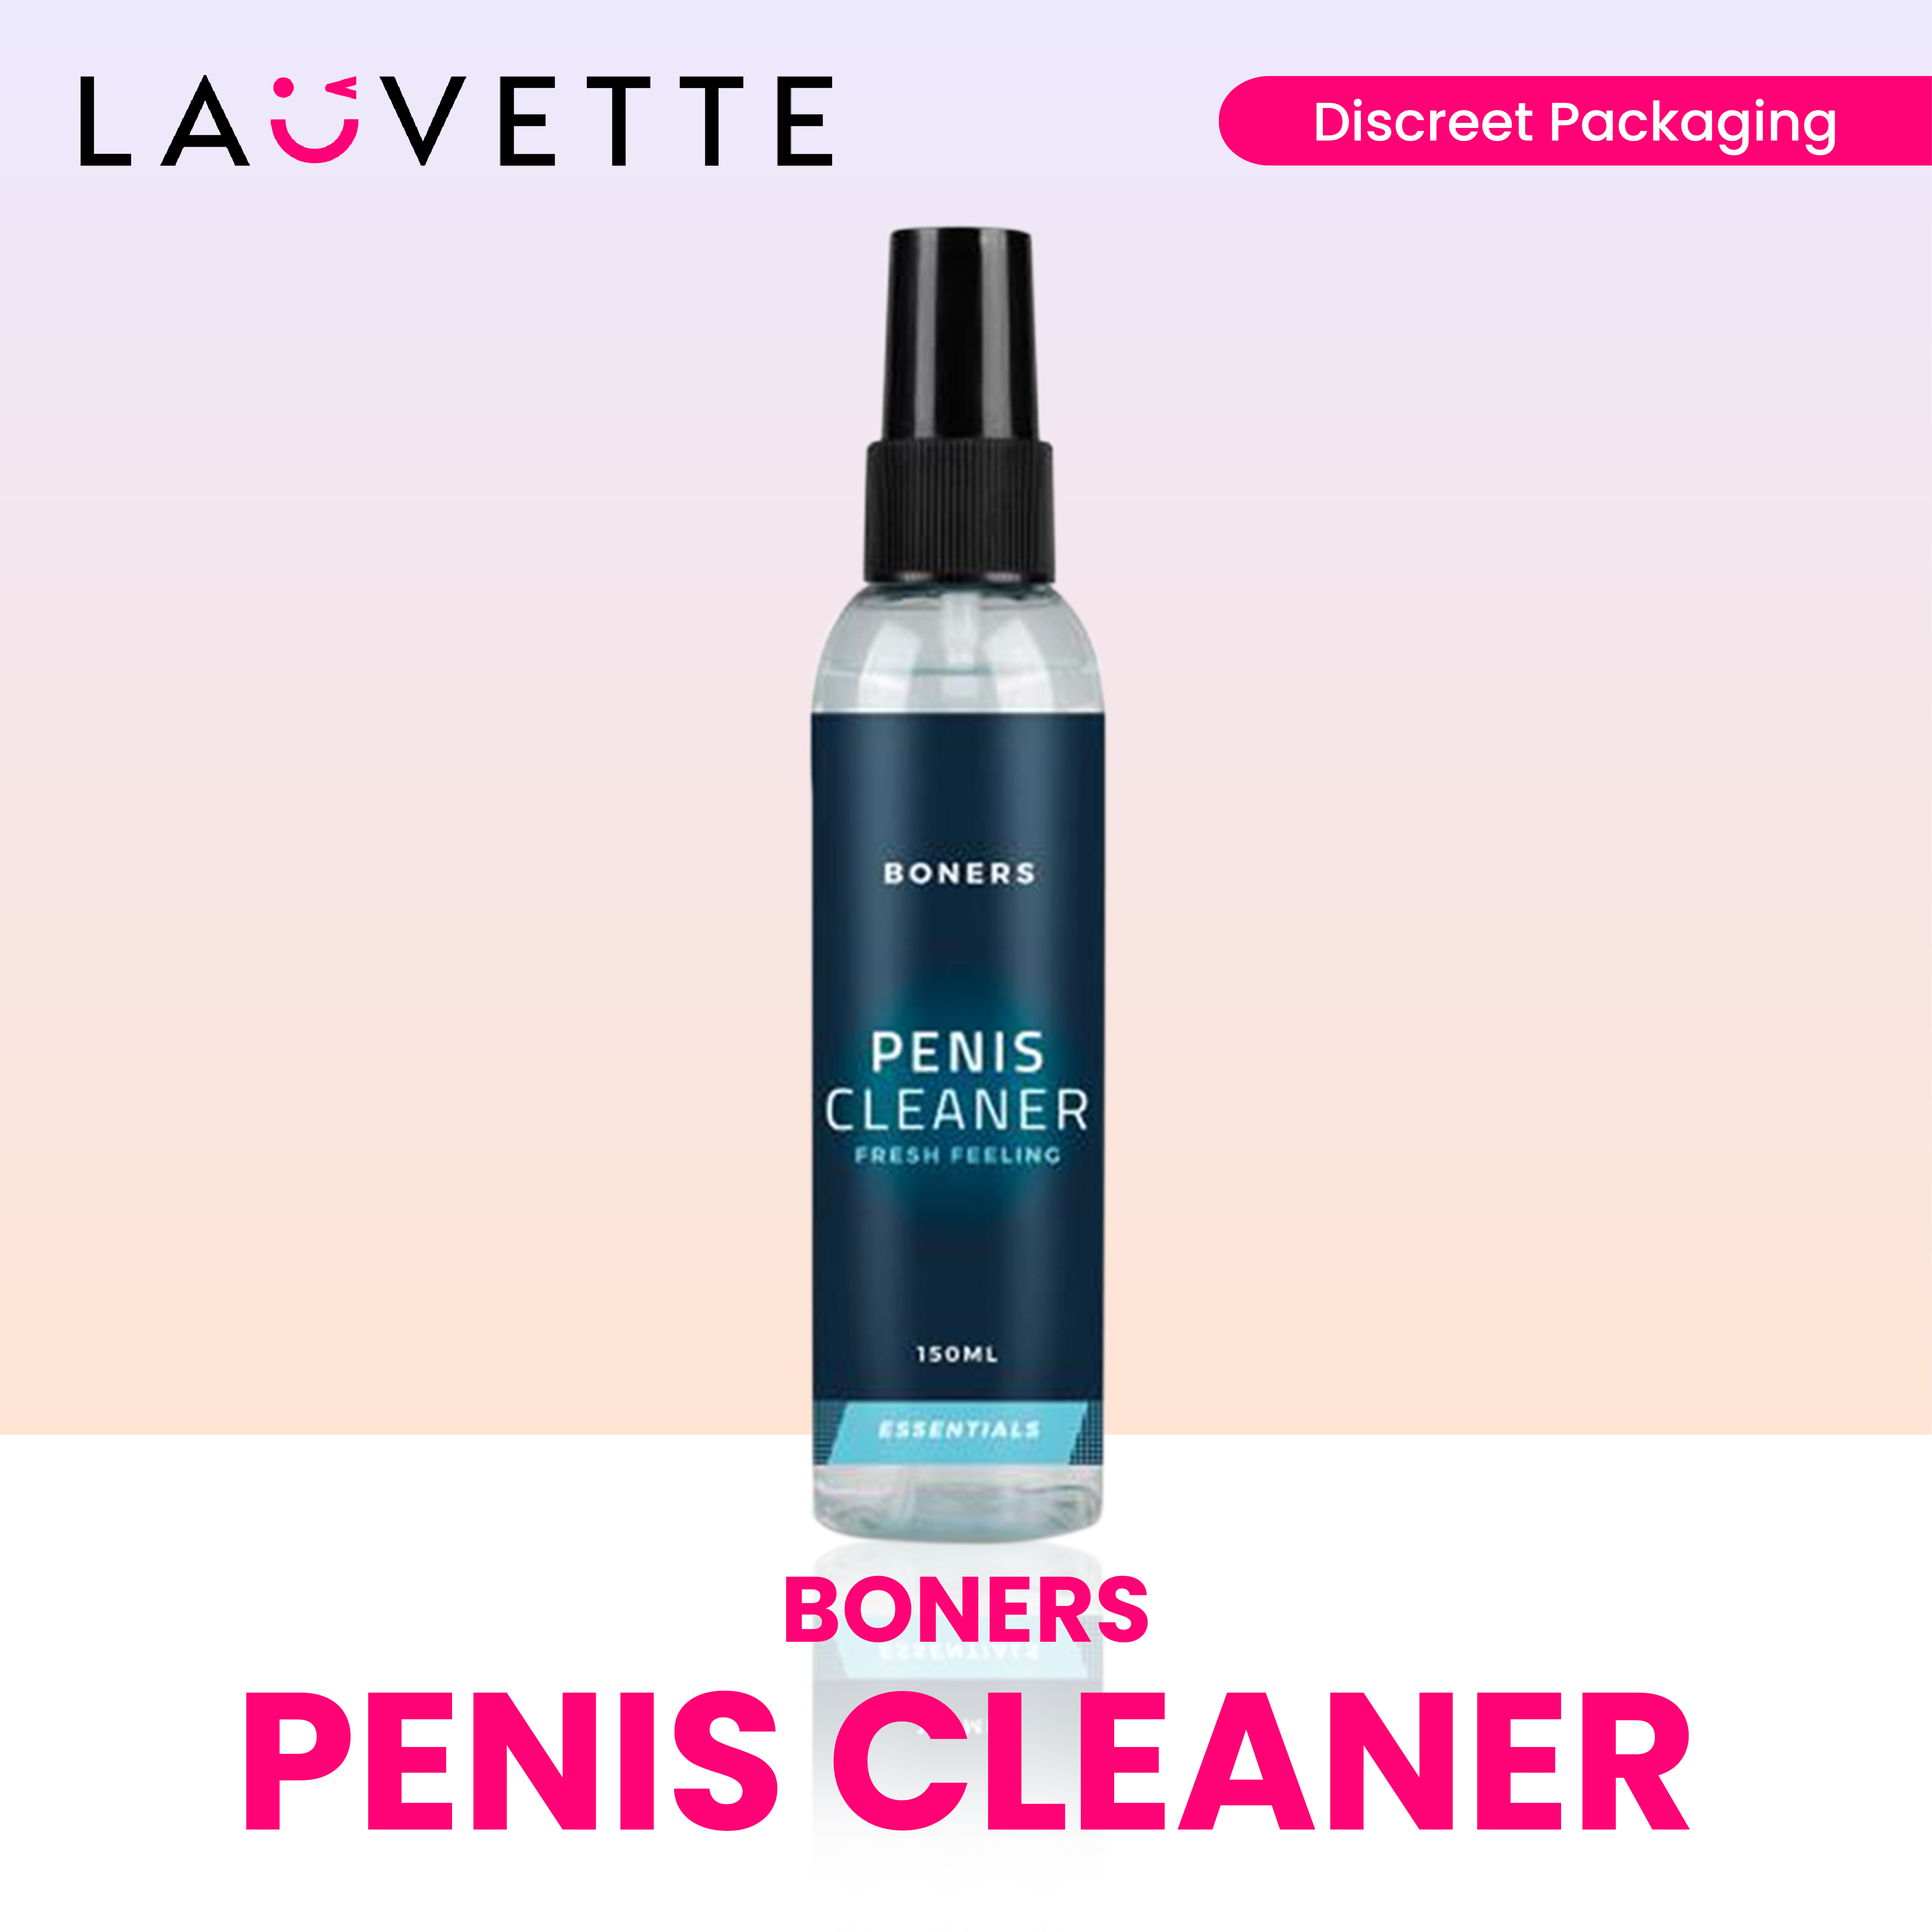 Penis Cleaner